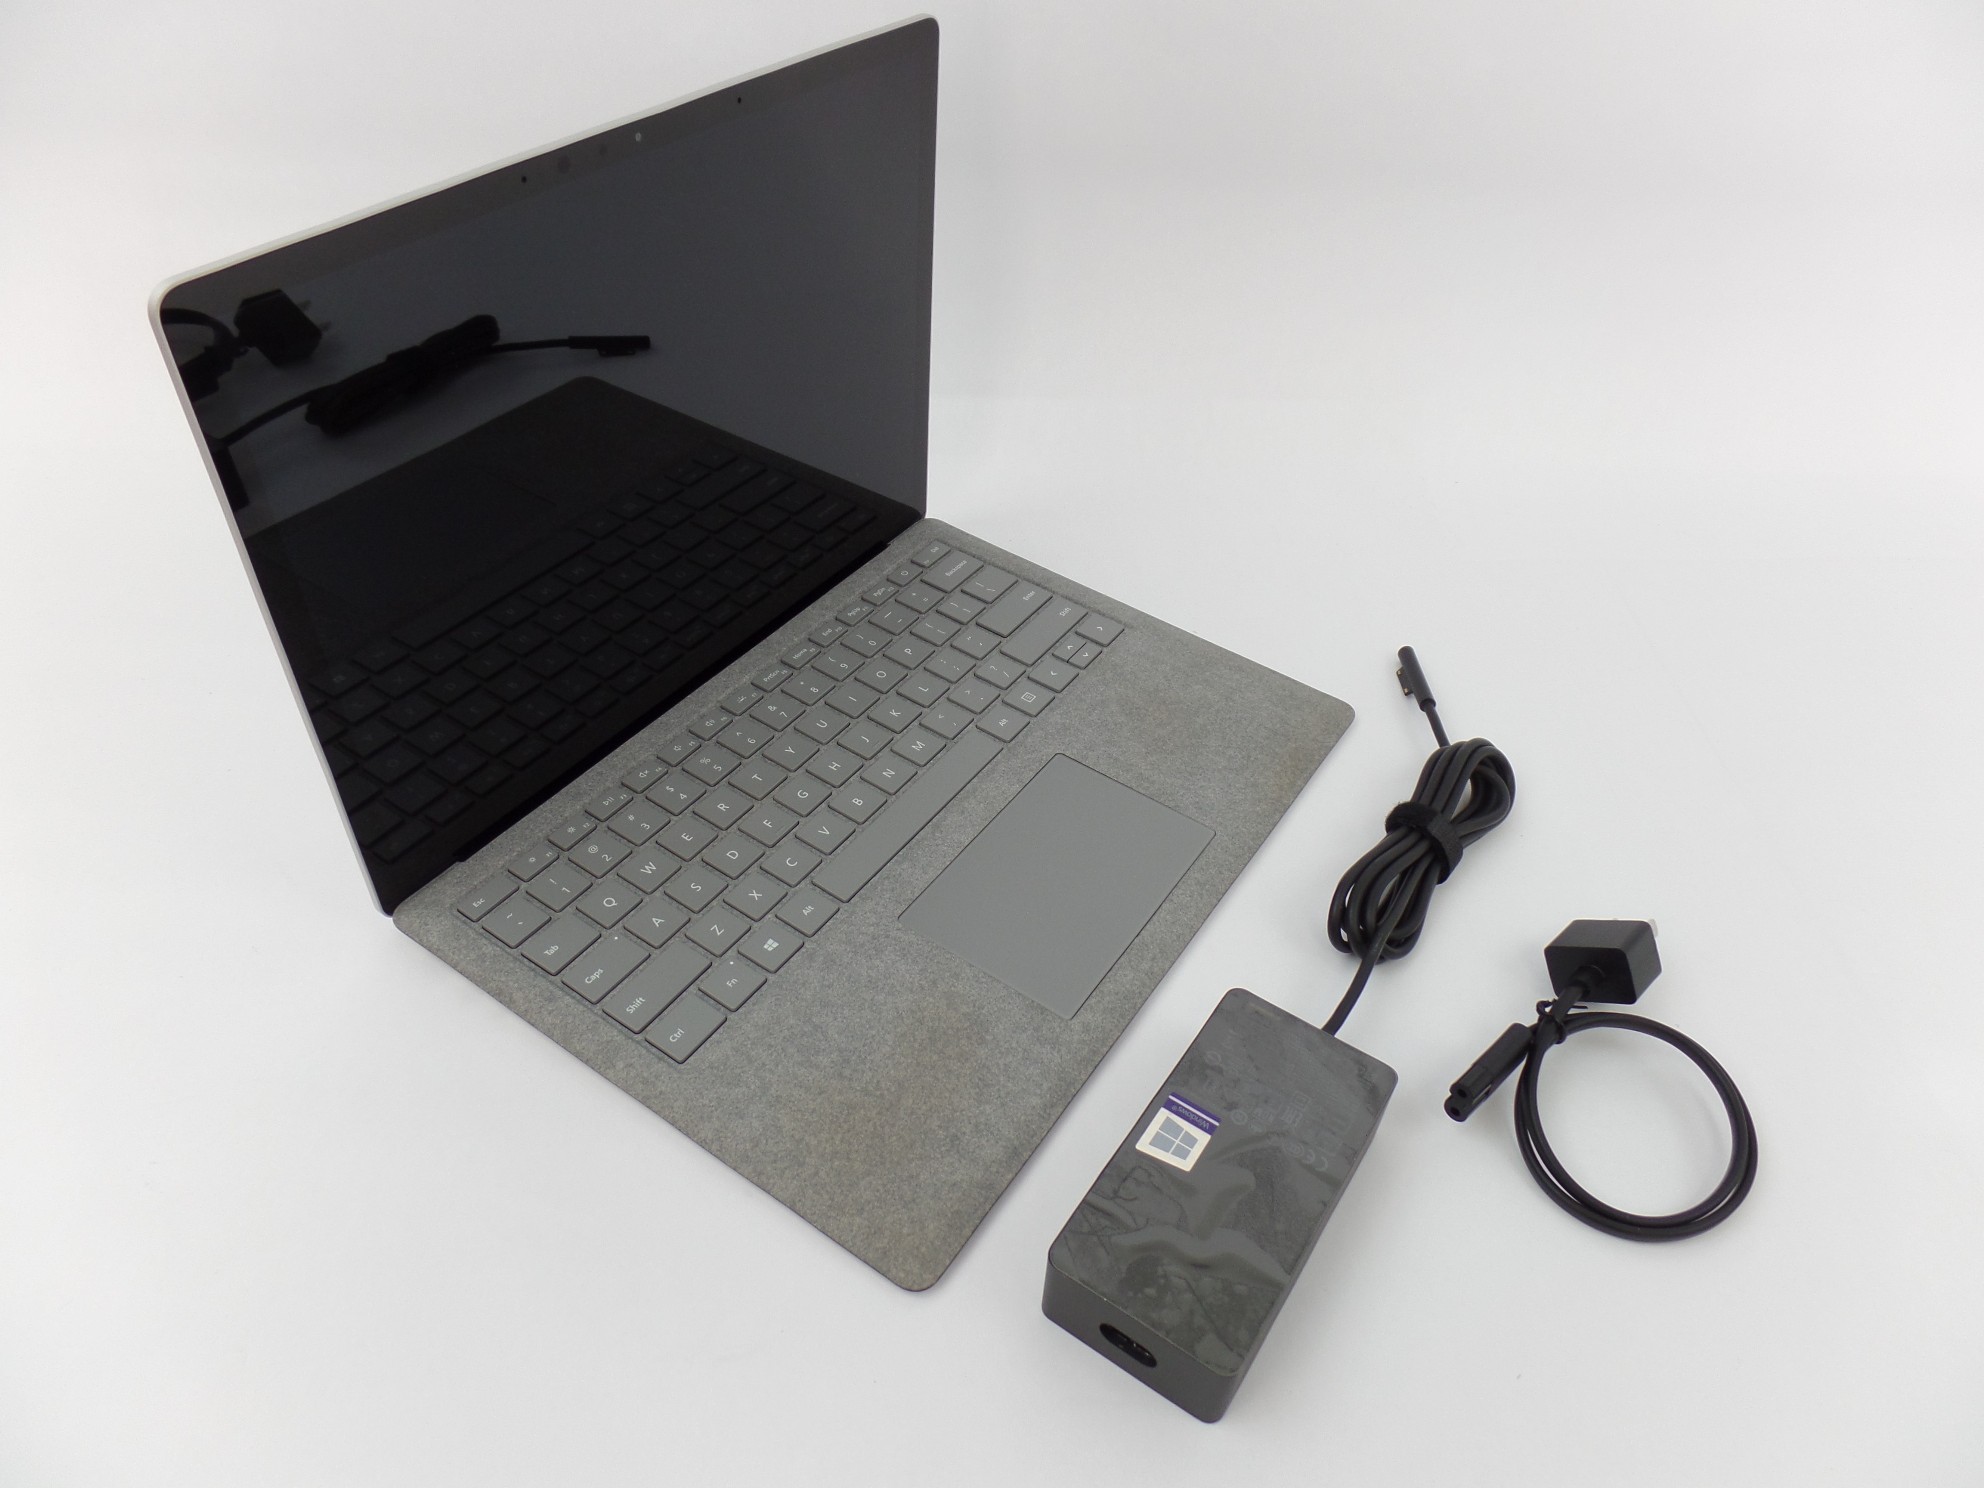 Microsoft Surface Laptop 1782 13.5" Touch M3-7Y30 1GHz 4GB 128GB SSD W10 Silver